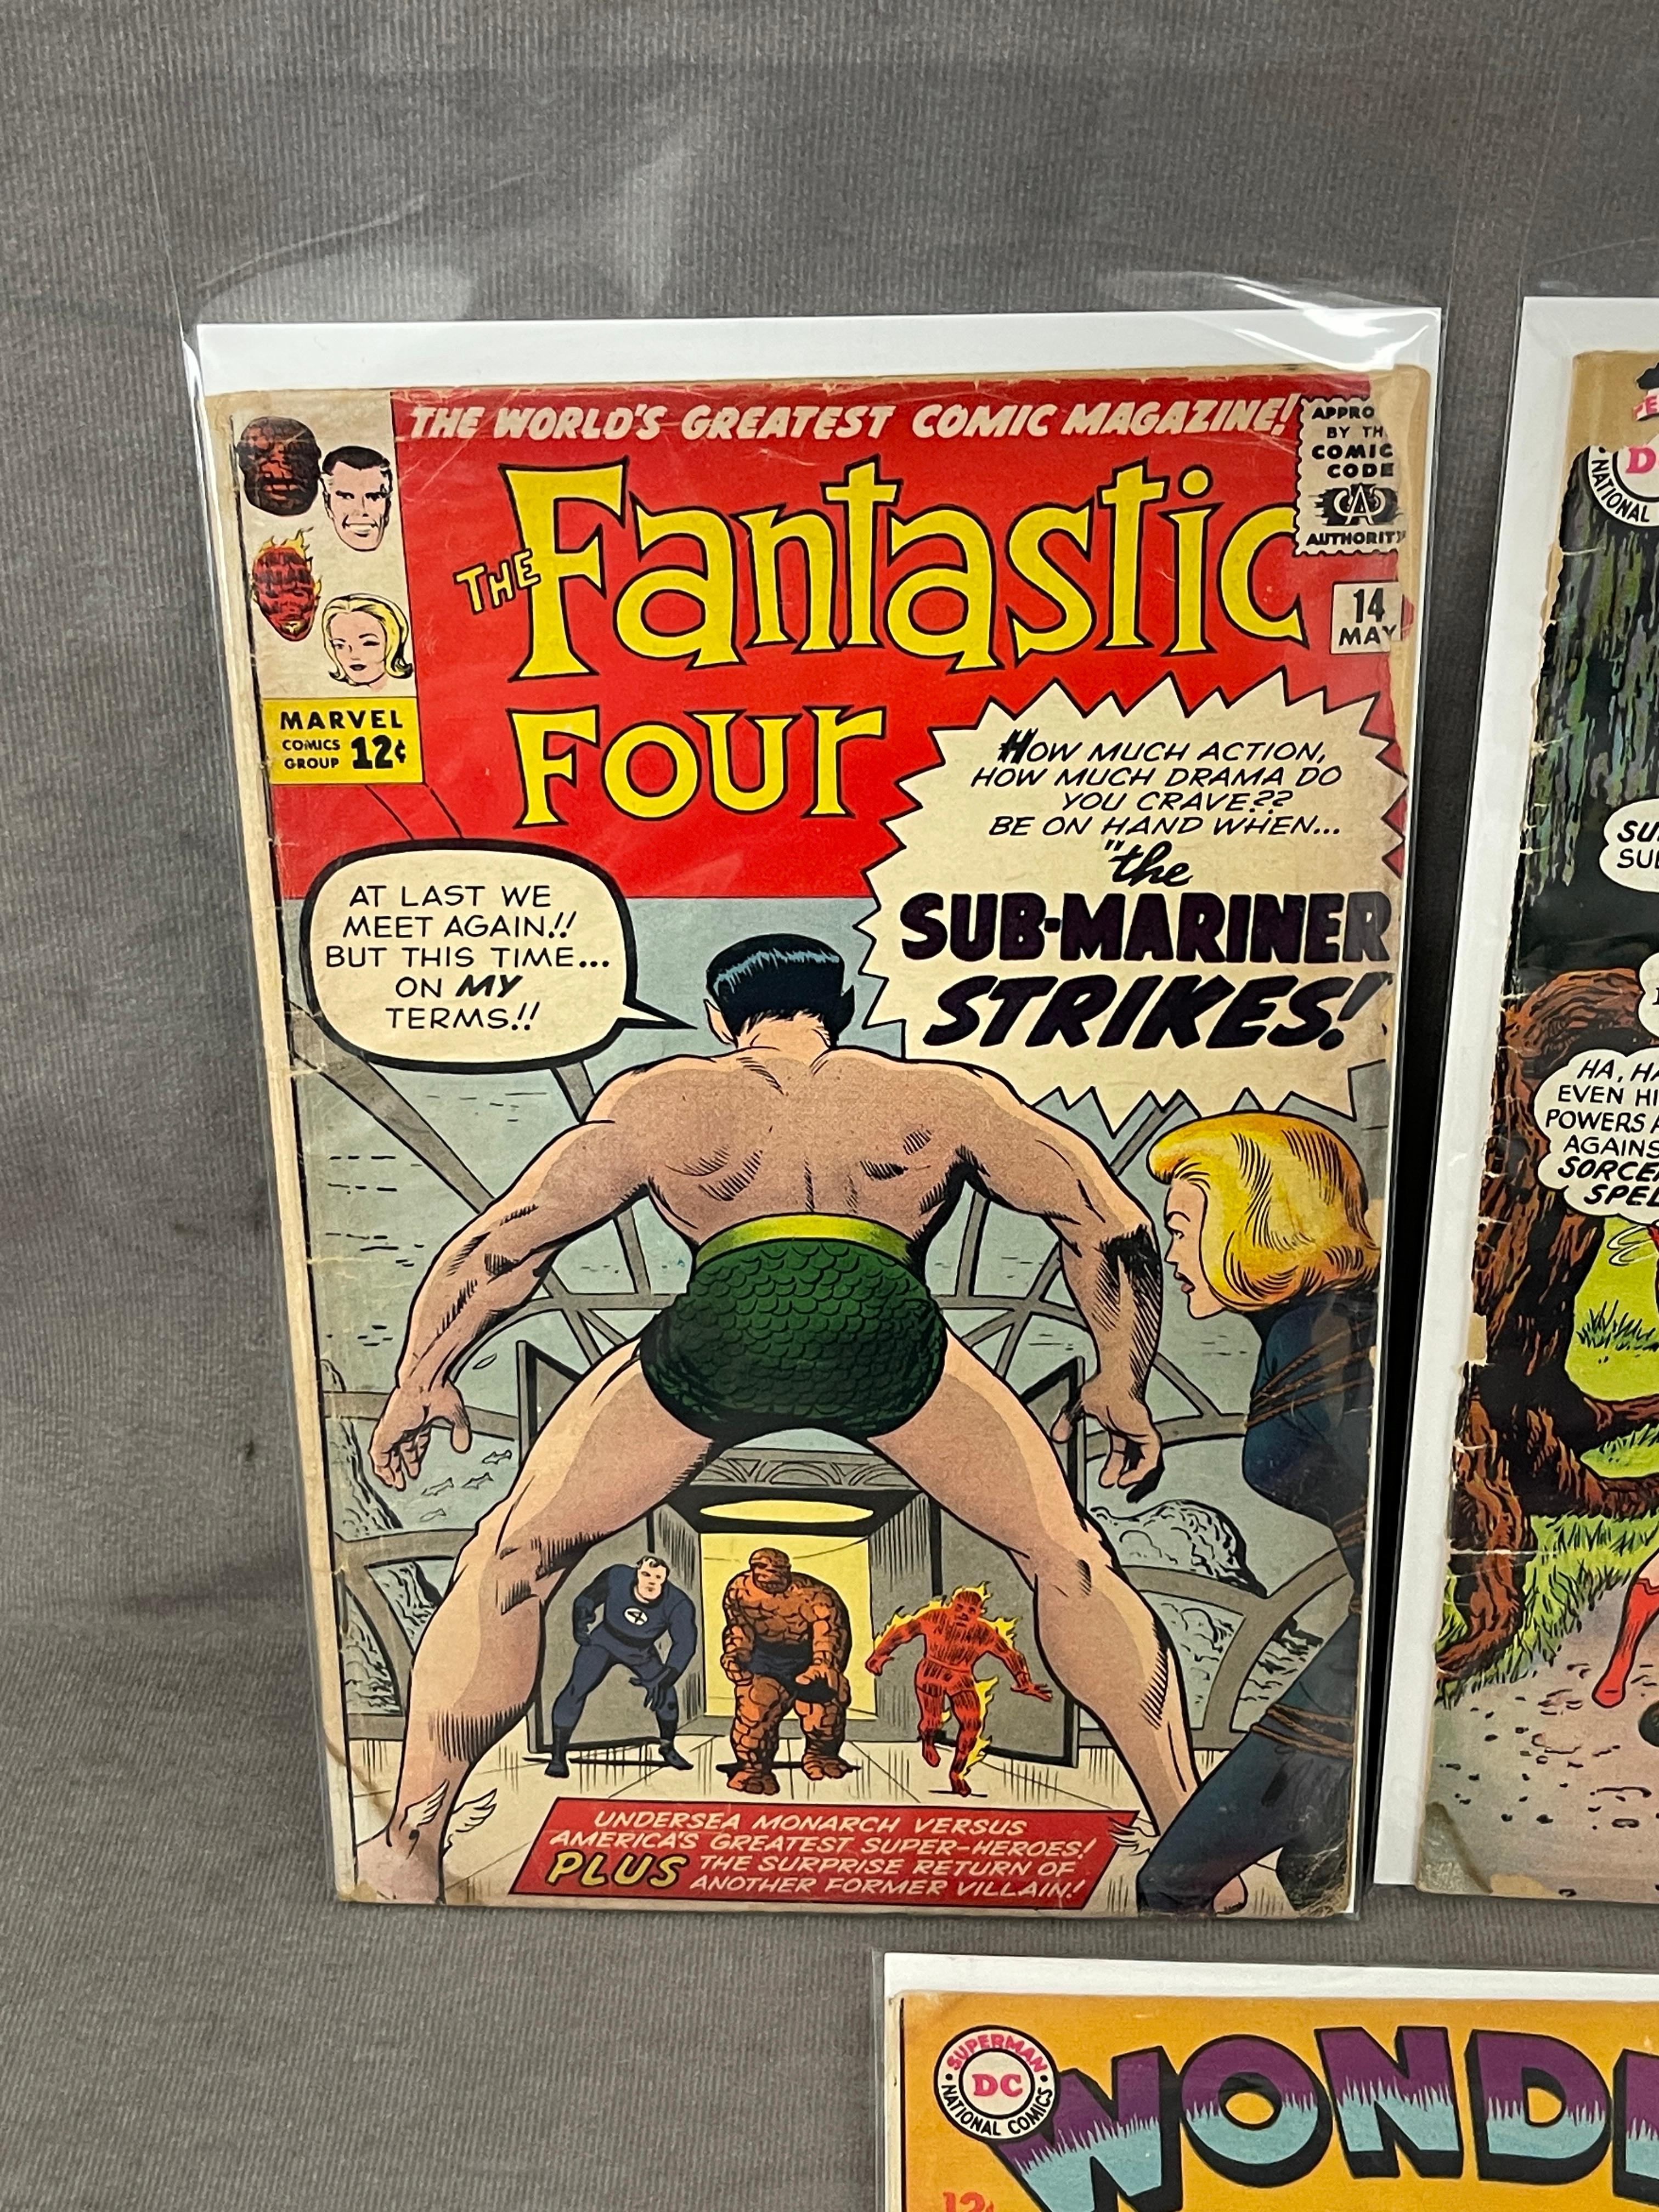 Fantastic Four #14 Wonder Women Vintage Comic Book Collection Sub-Mariner